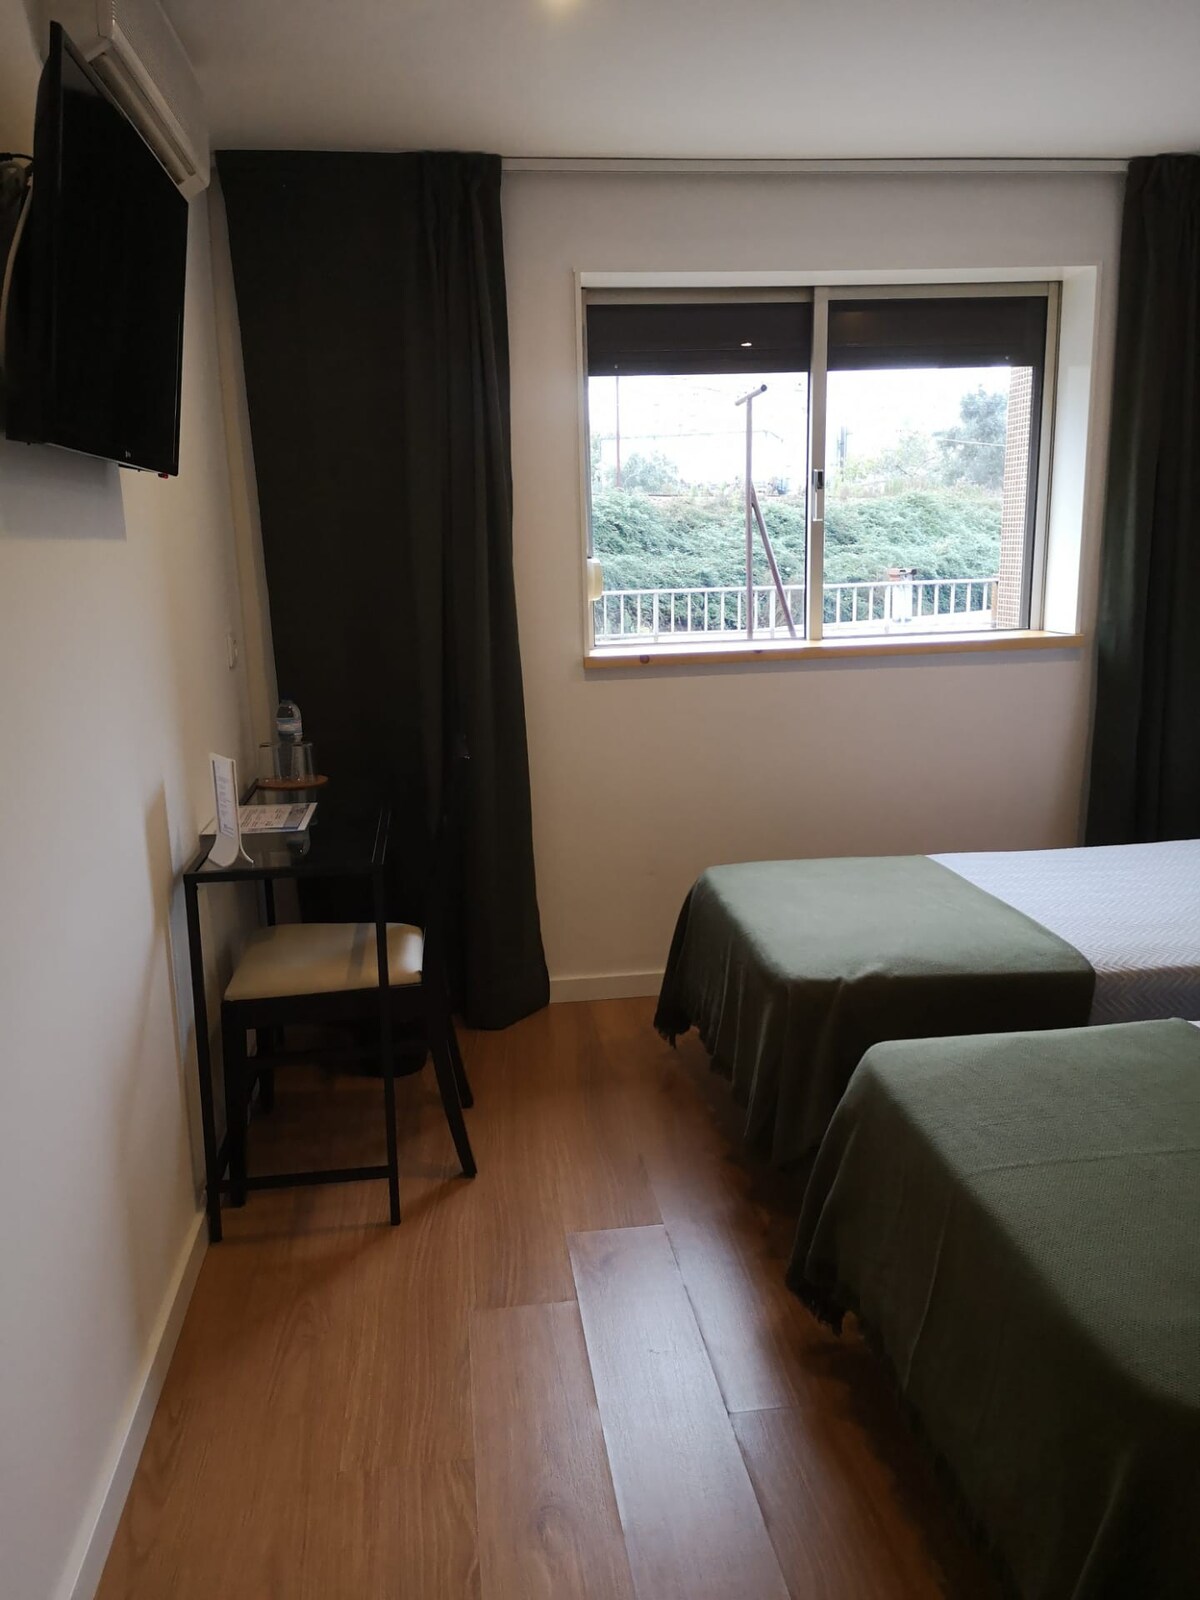 Residencial Douro双人卧室双床房